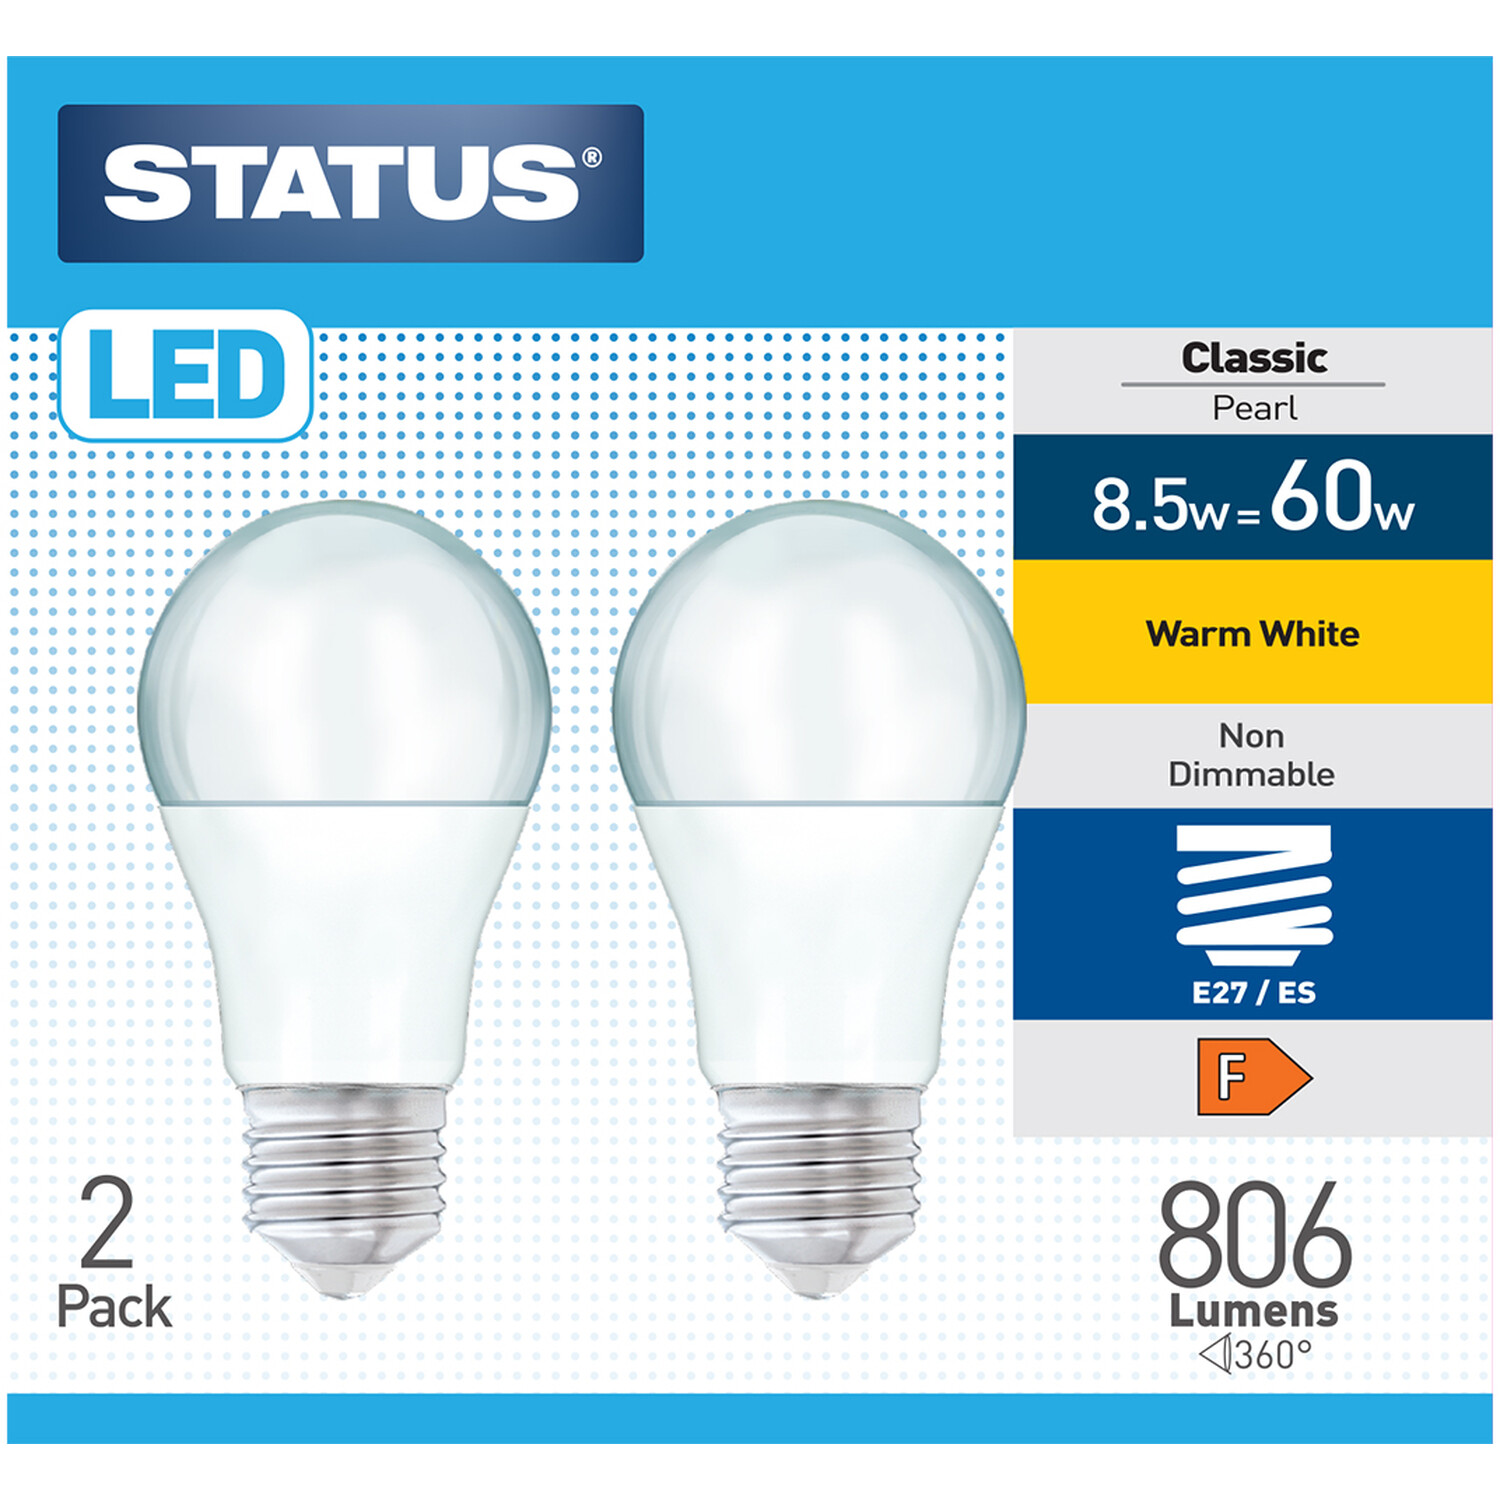 Status 2 Pack E27/ES LED 8.5W Classic Pearl Light Bulbs Image 1